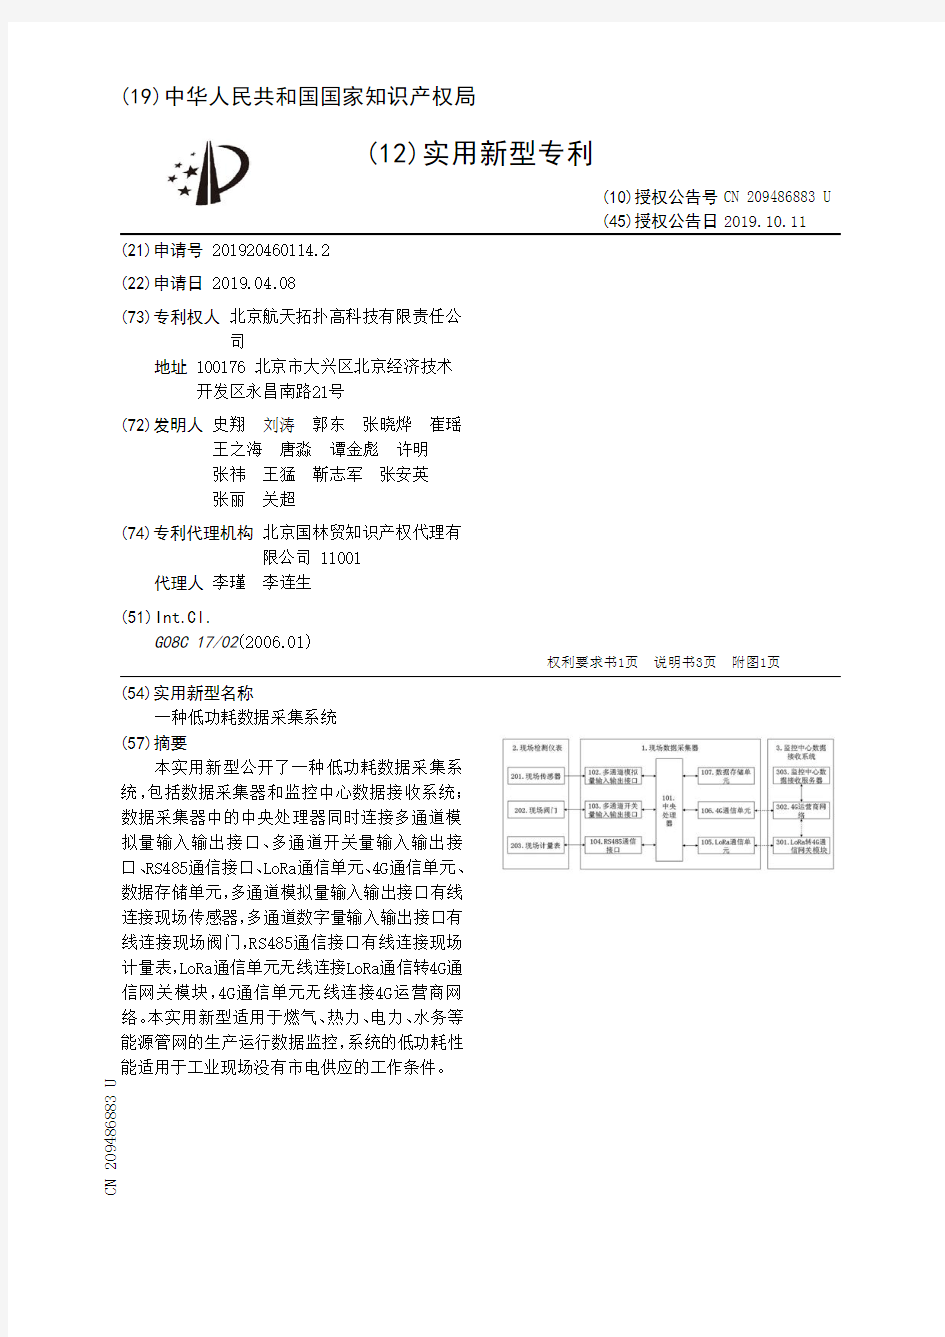 【CN209486883U】一种低功耗数据采集系统【专利】